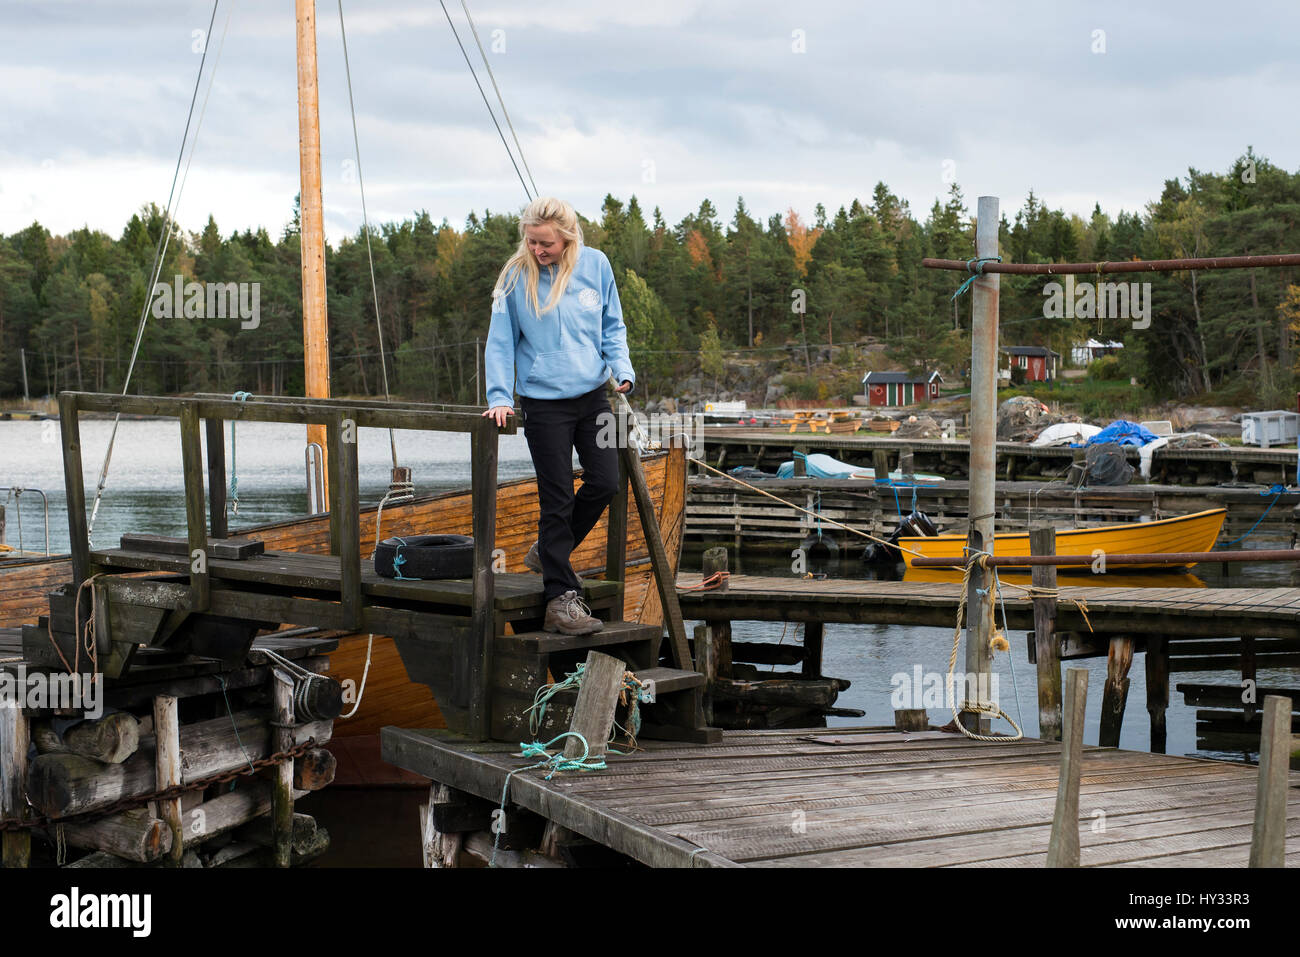 Sweden, Sodermanland, Braviken, Young woman walking on wooden dock Stock Photo